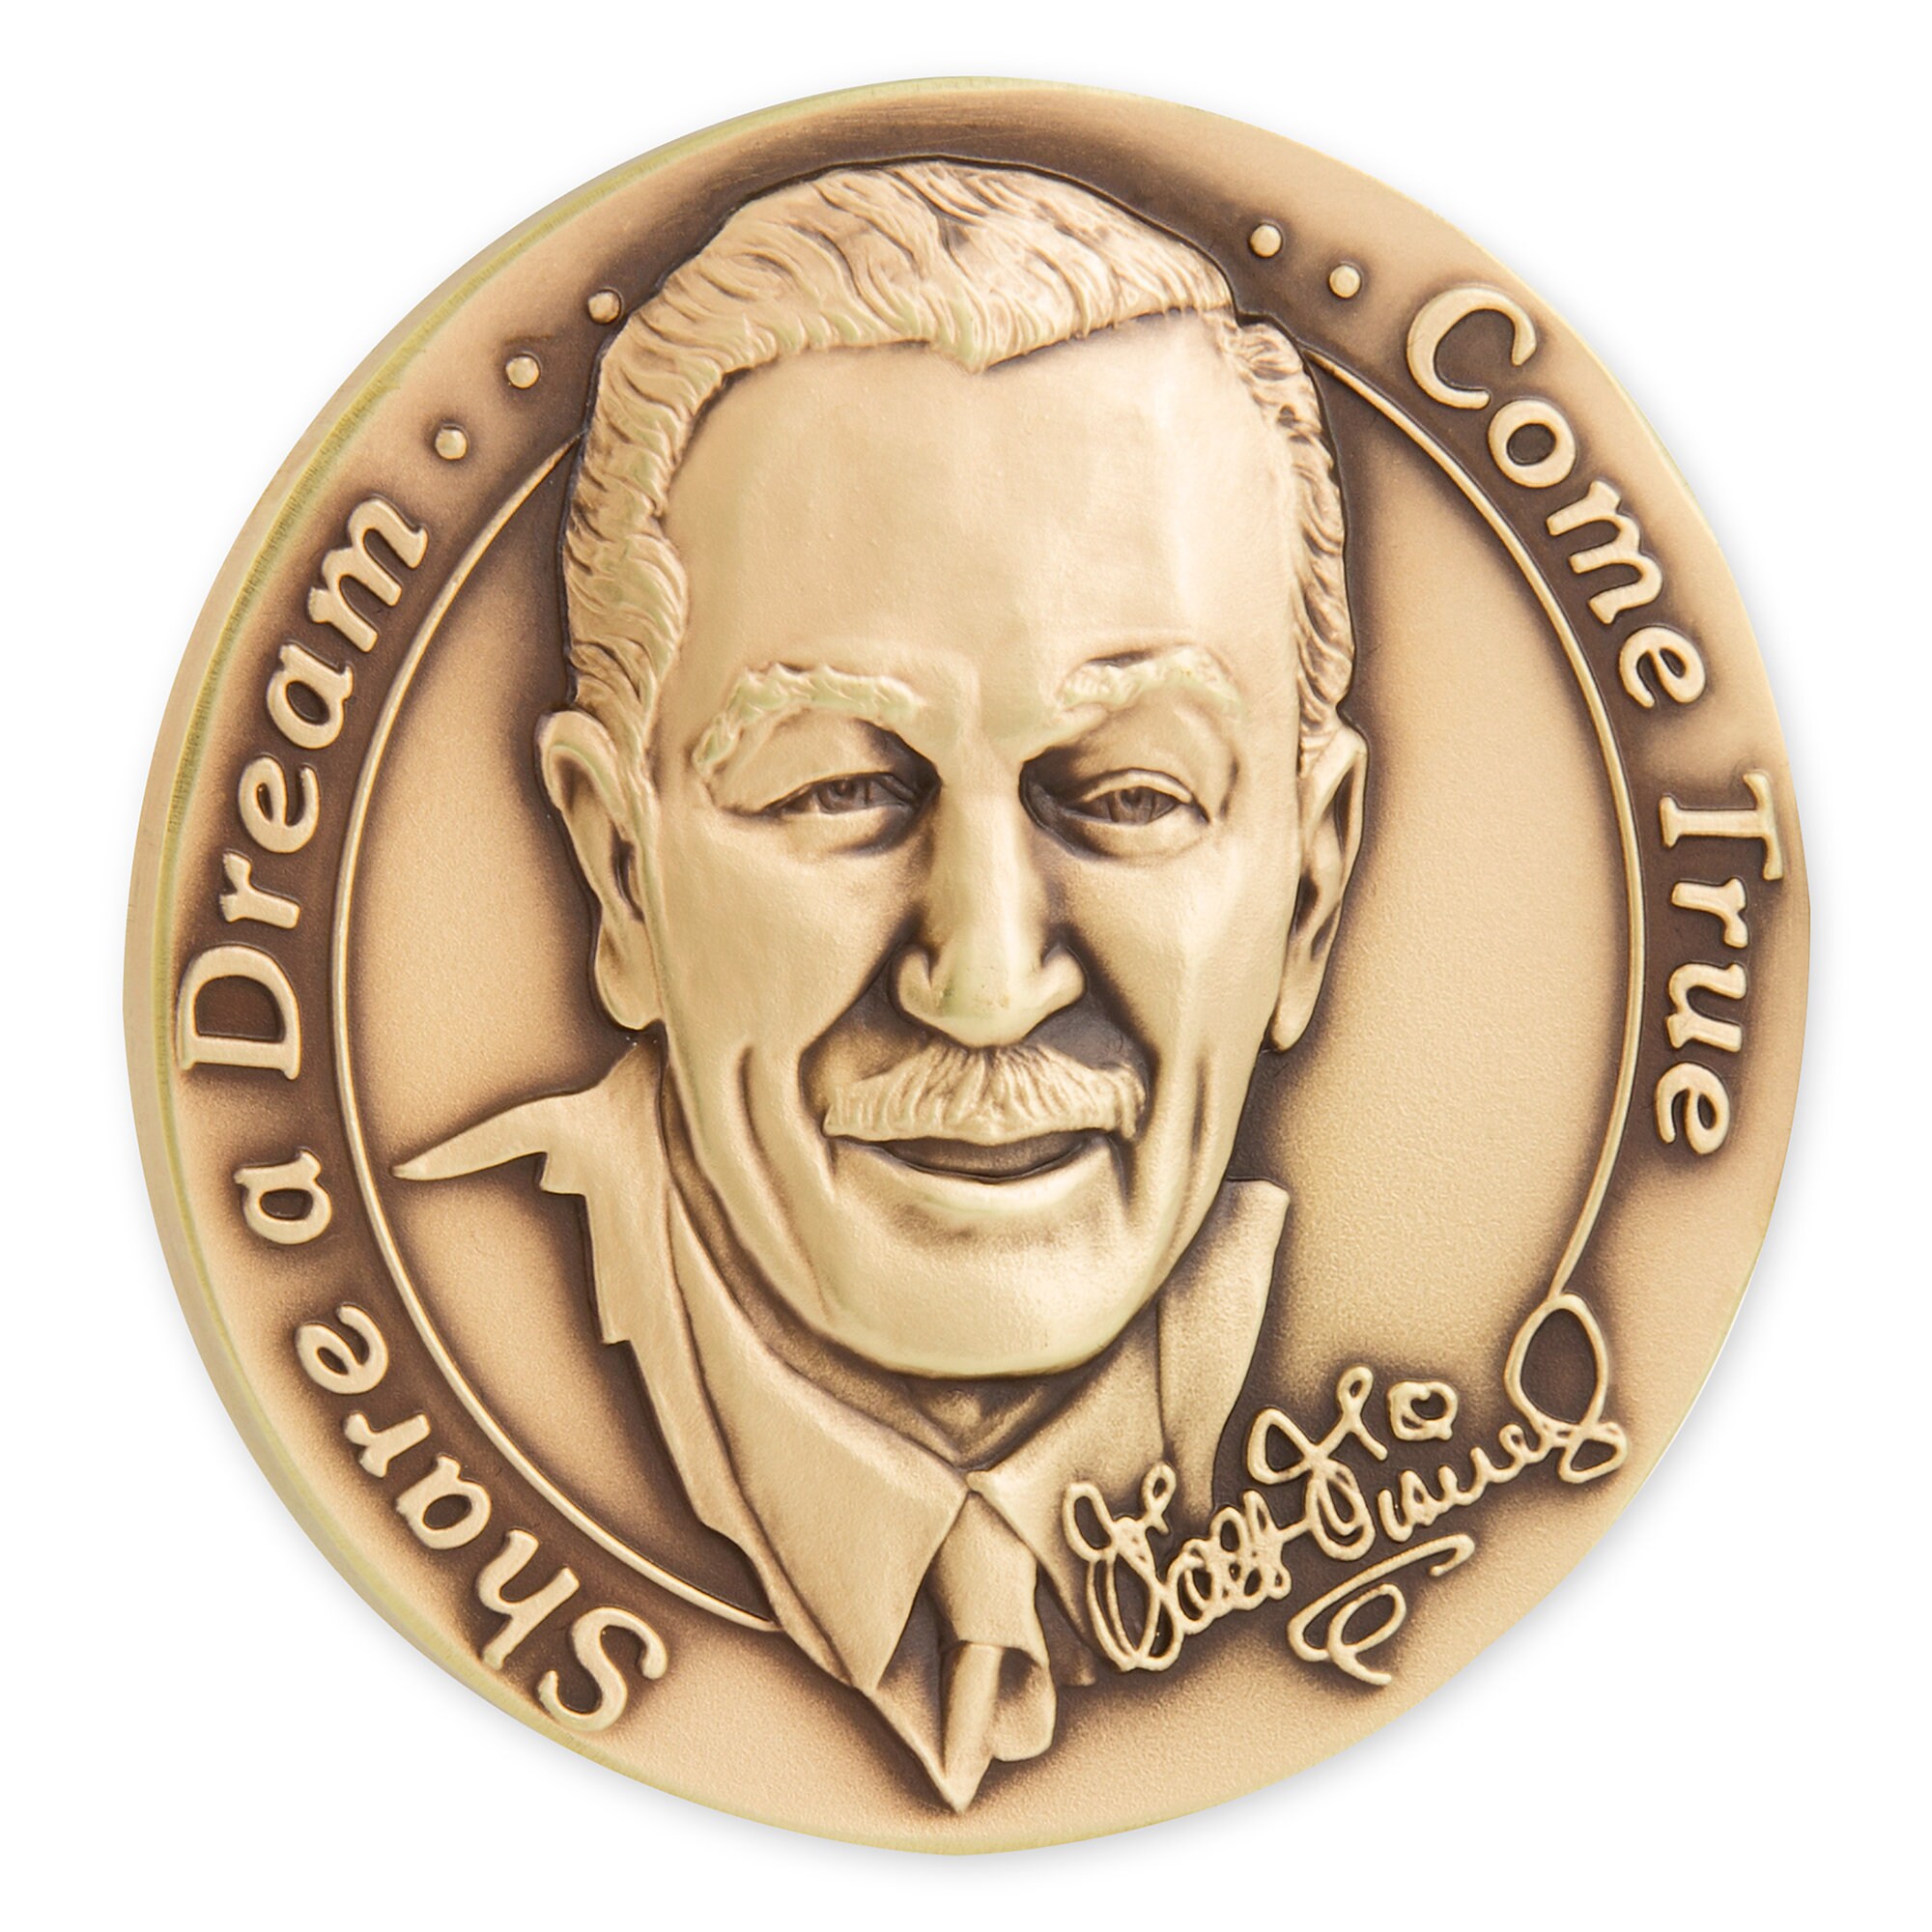 Walt Disney Disney Parks Medallion - Limited Edition